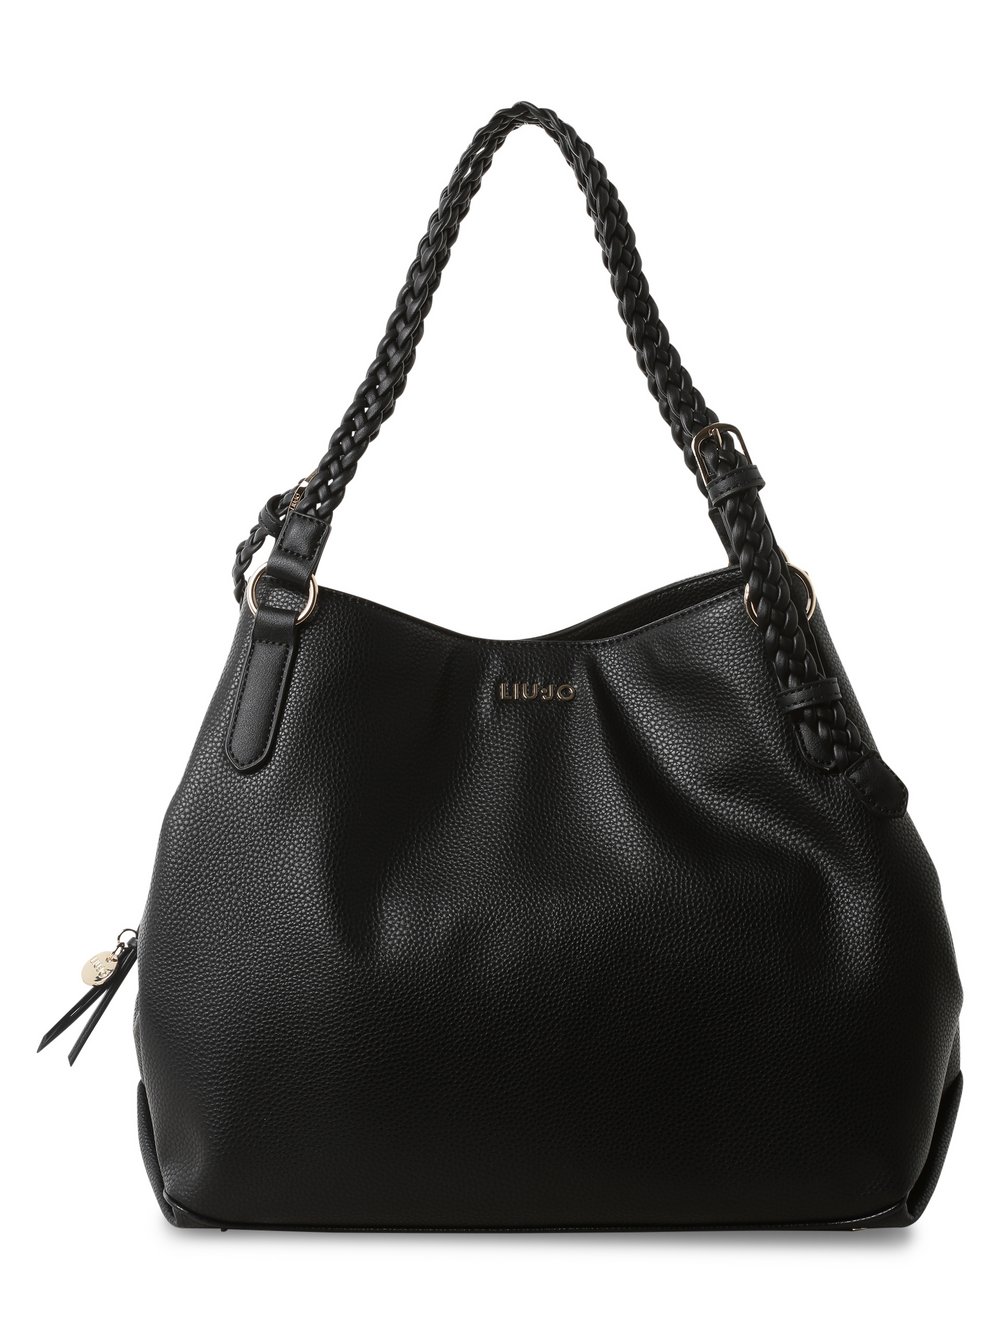 Liu Jo Collection - Damska torba na ramię – Campanula, czarny